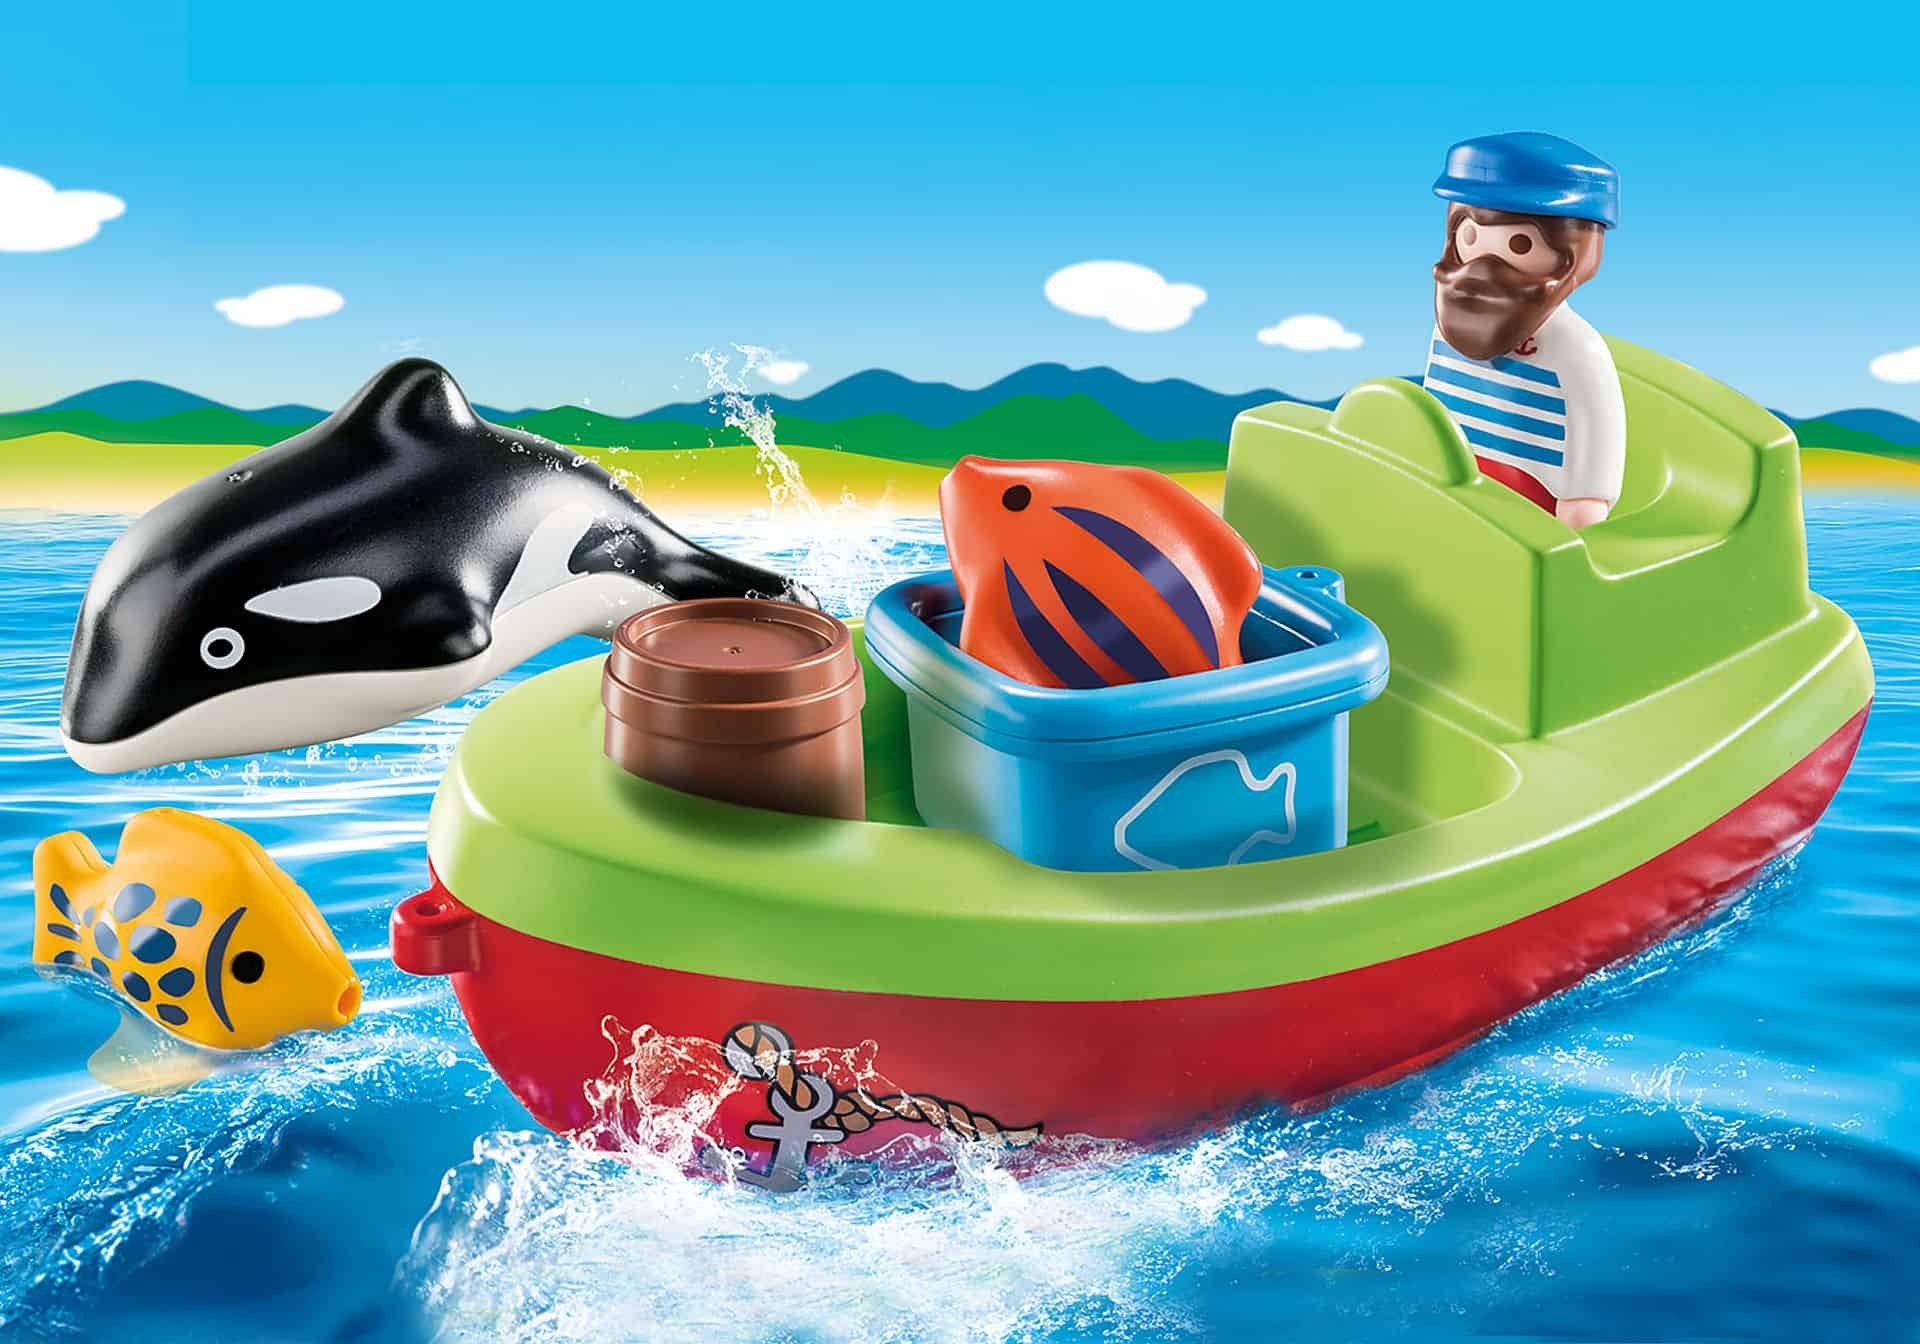 Barca del Pescatore Playmobil 1.2.3 70183